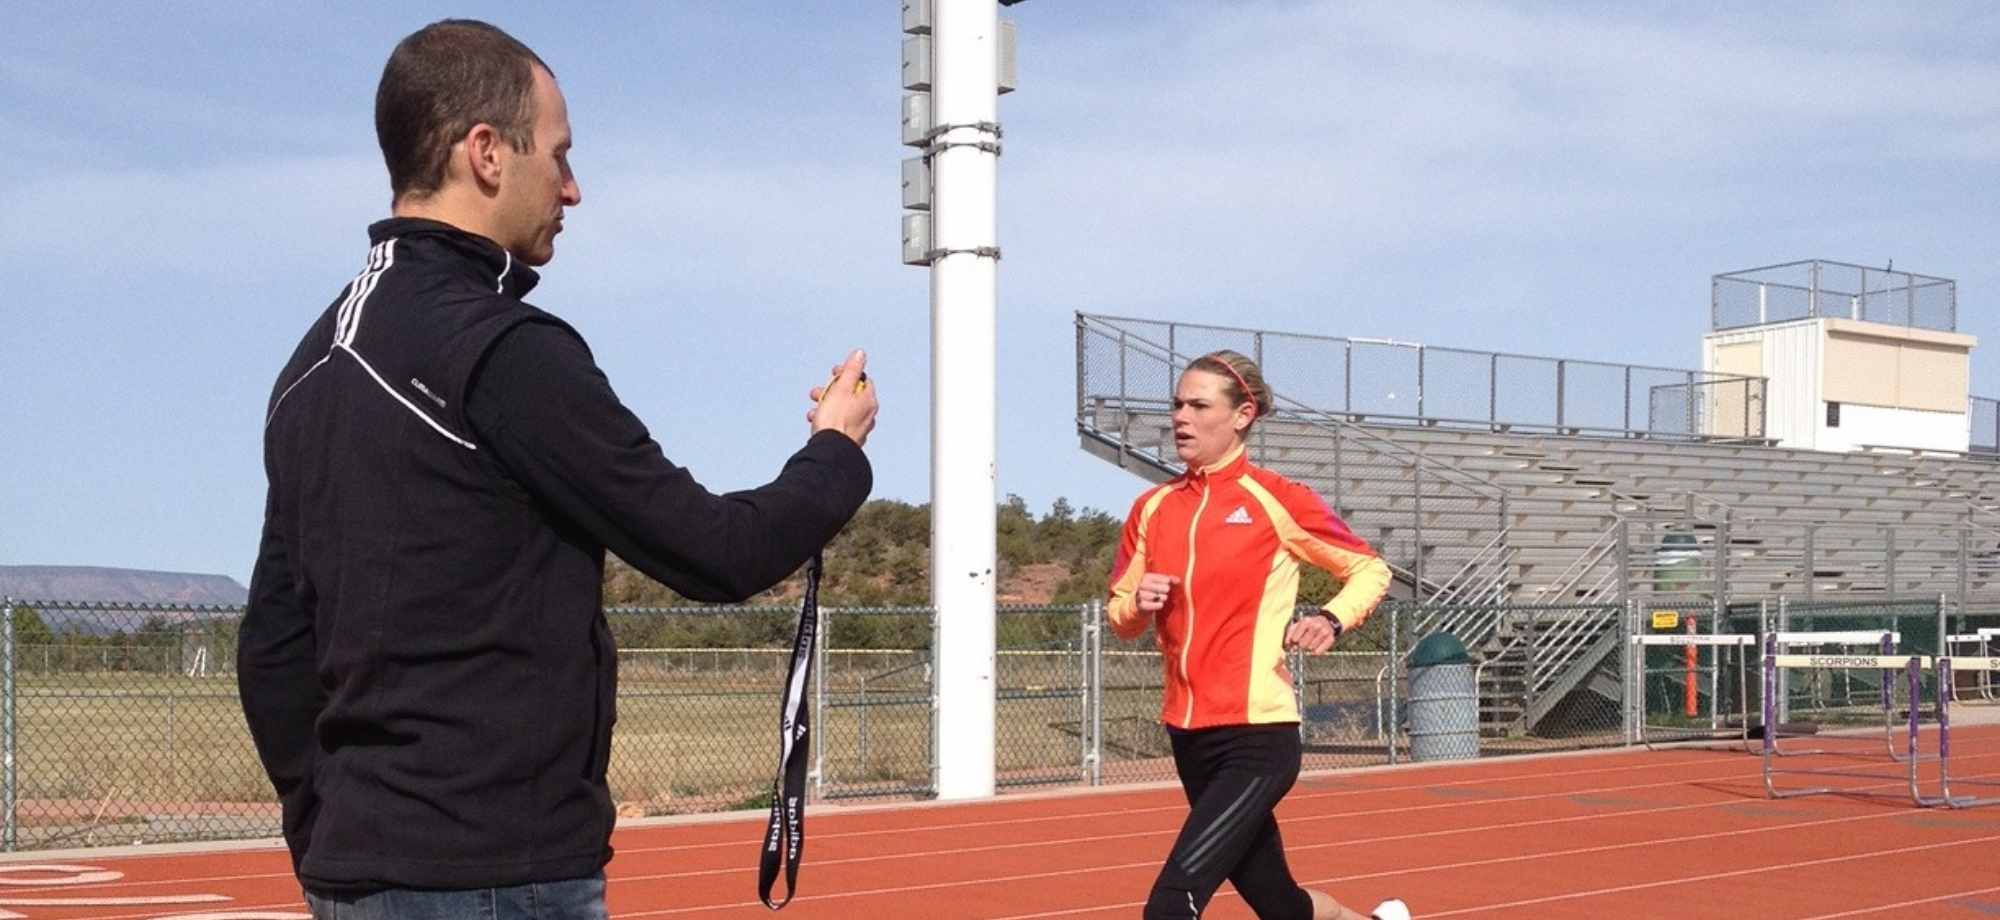 Running Coach Greg McMillan on Flexibility and Training 